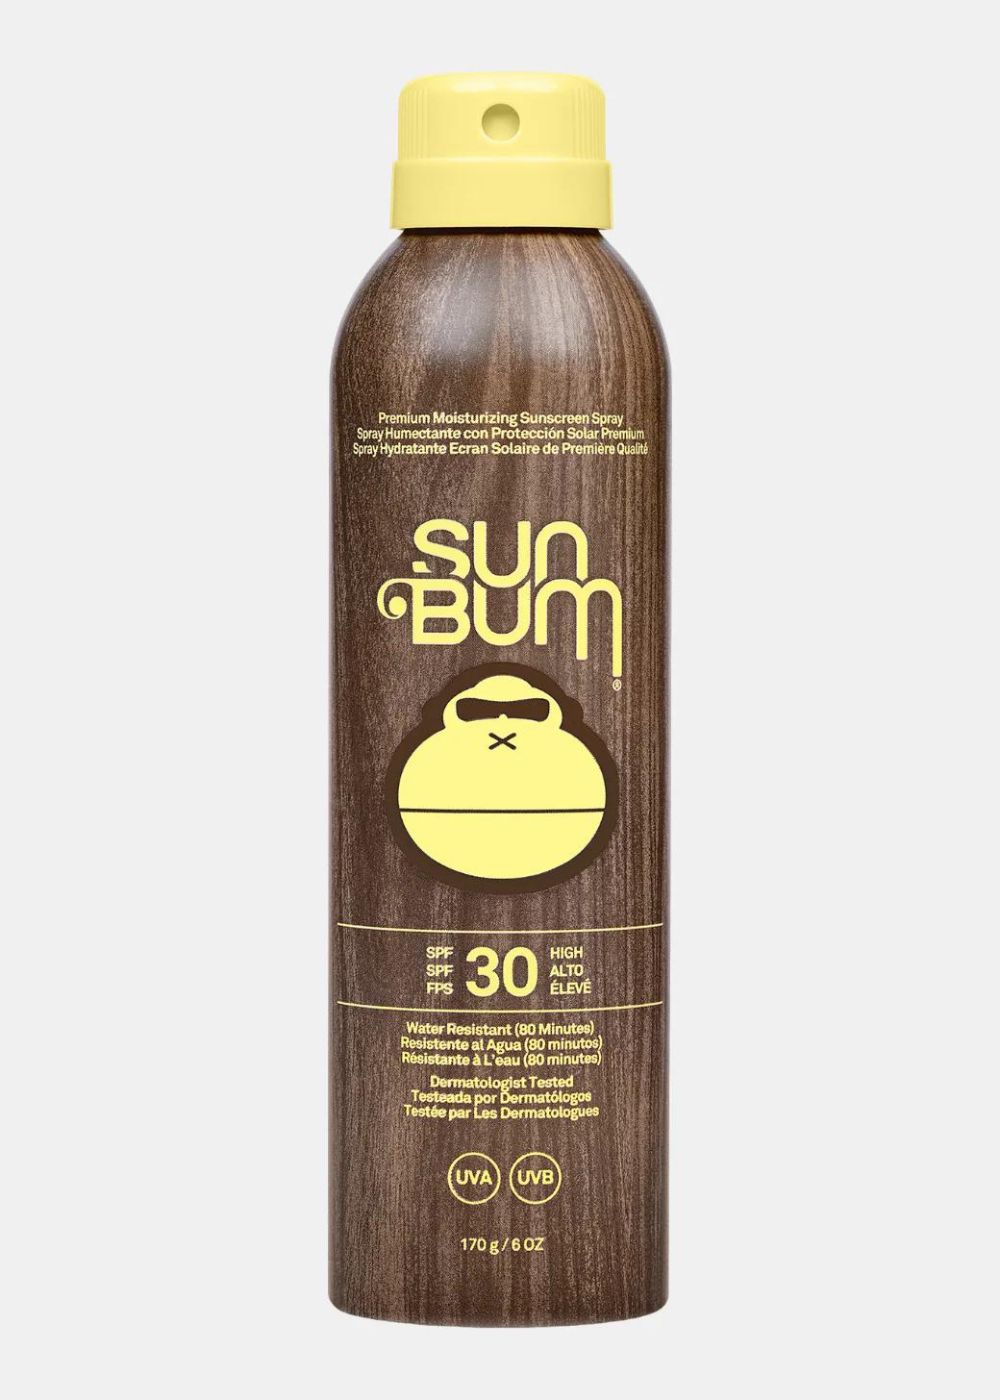 Sun Bum  Original SPF 30 Sunscreen Spray  177 ml - קרם הגנה ספריי 30spf